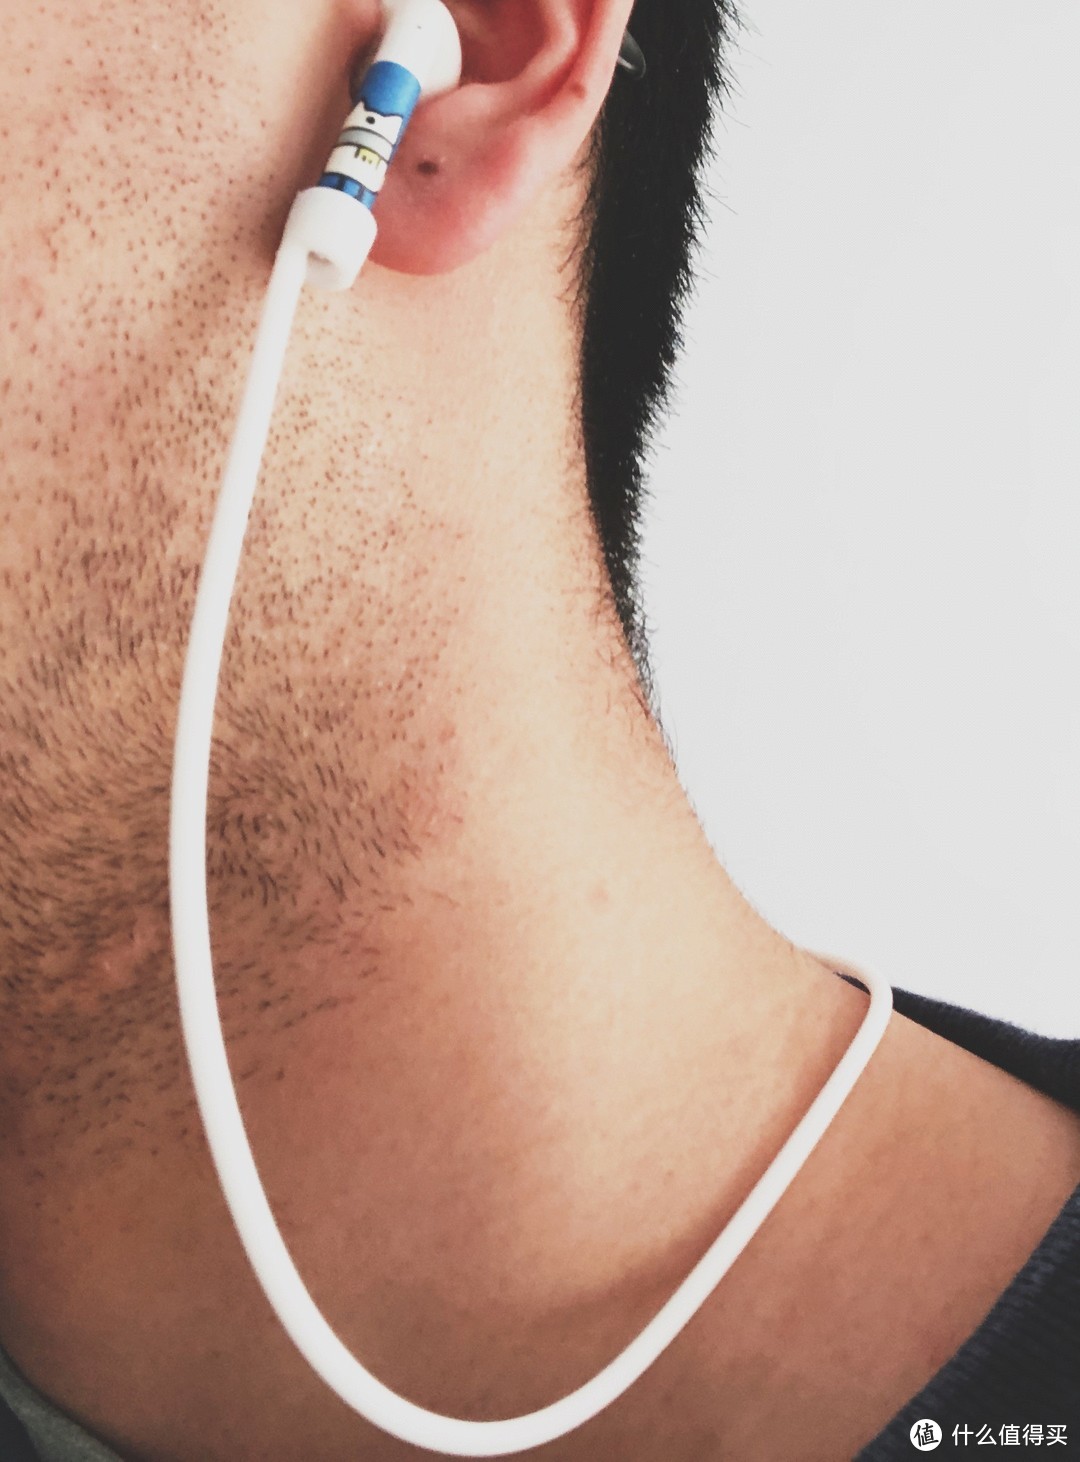 Apple 苹果 Airpods 蓝牙耳机配件选购指南